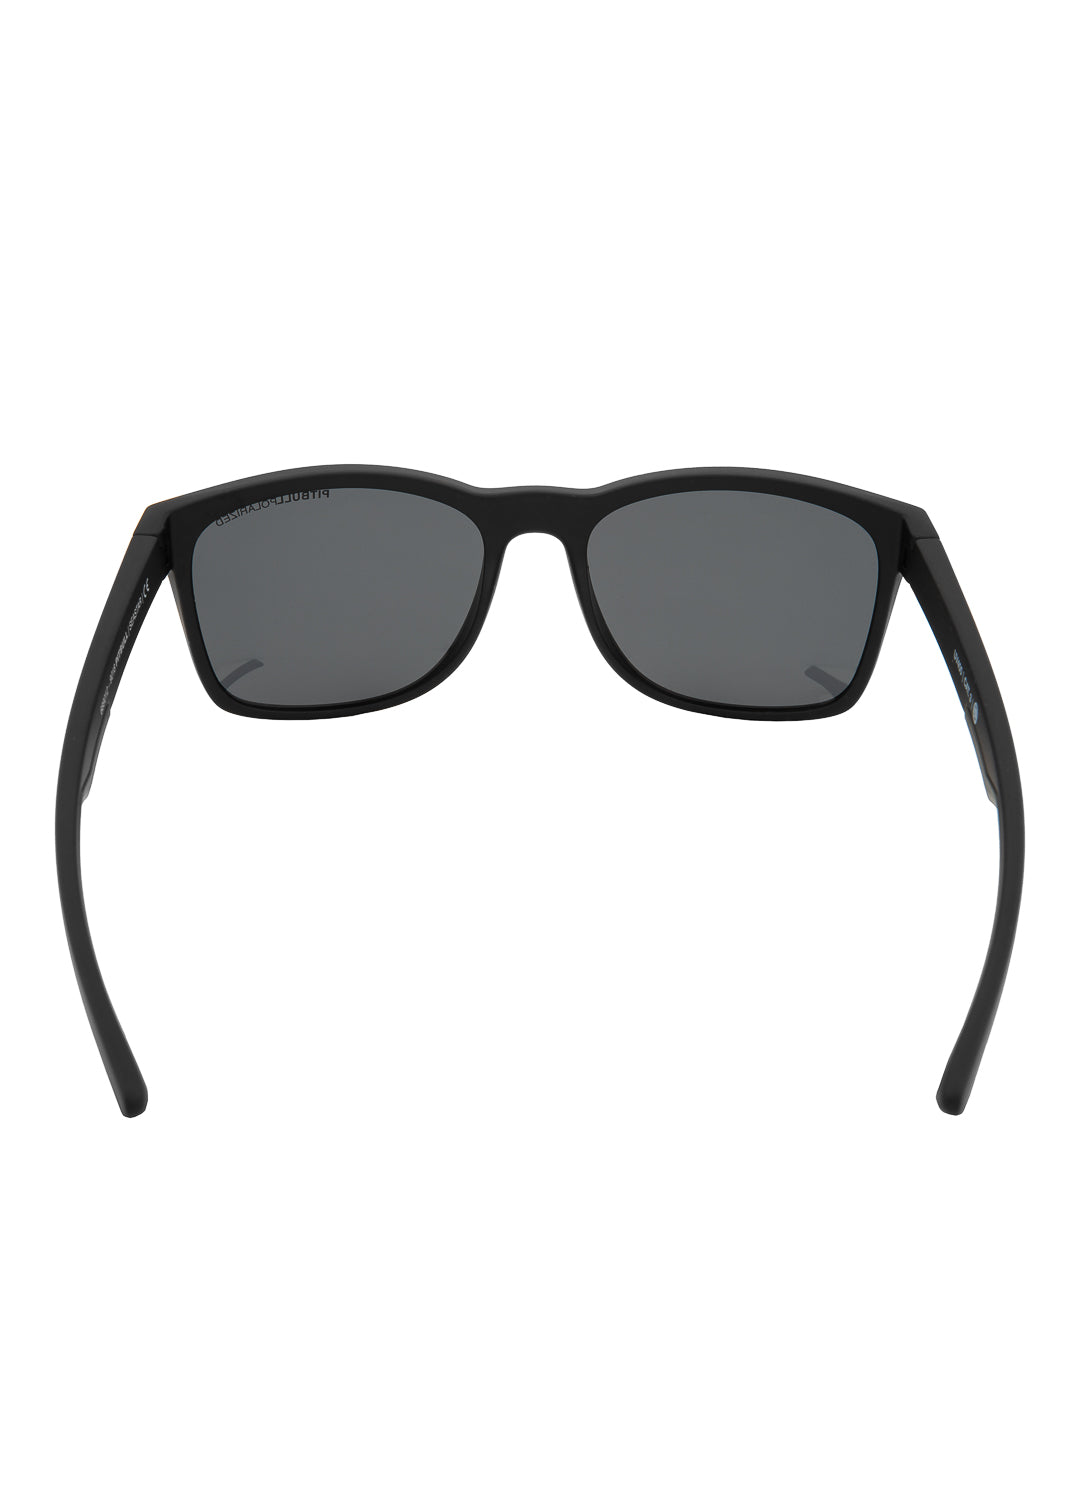 Sunglasses SEASTAR Black/Grey - Pitbull West Coast International Store 